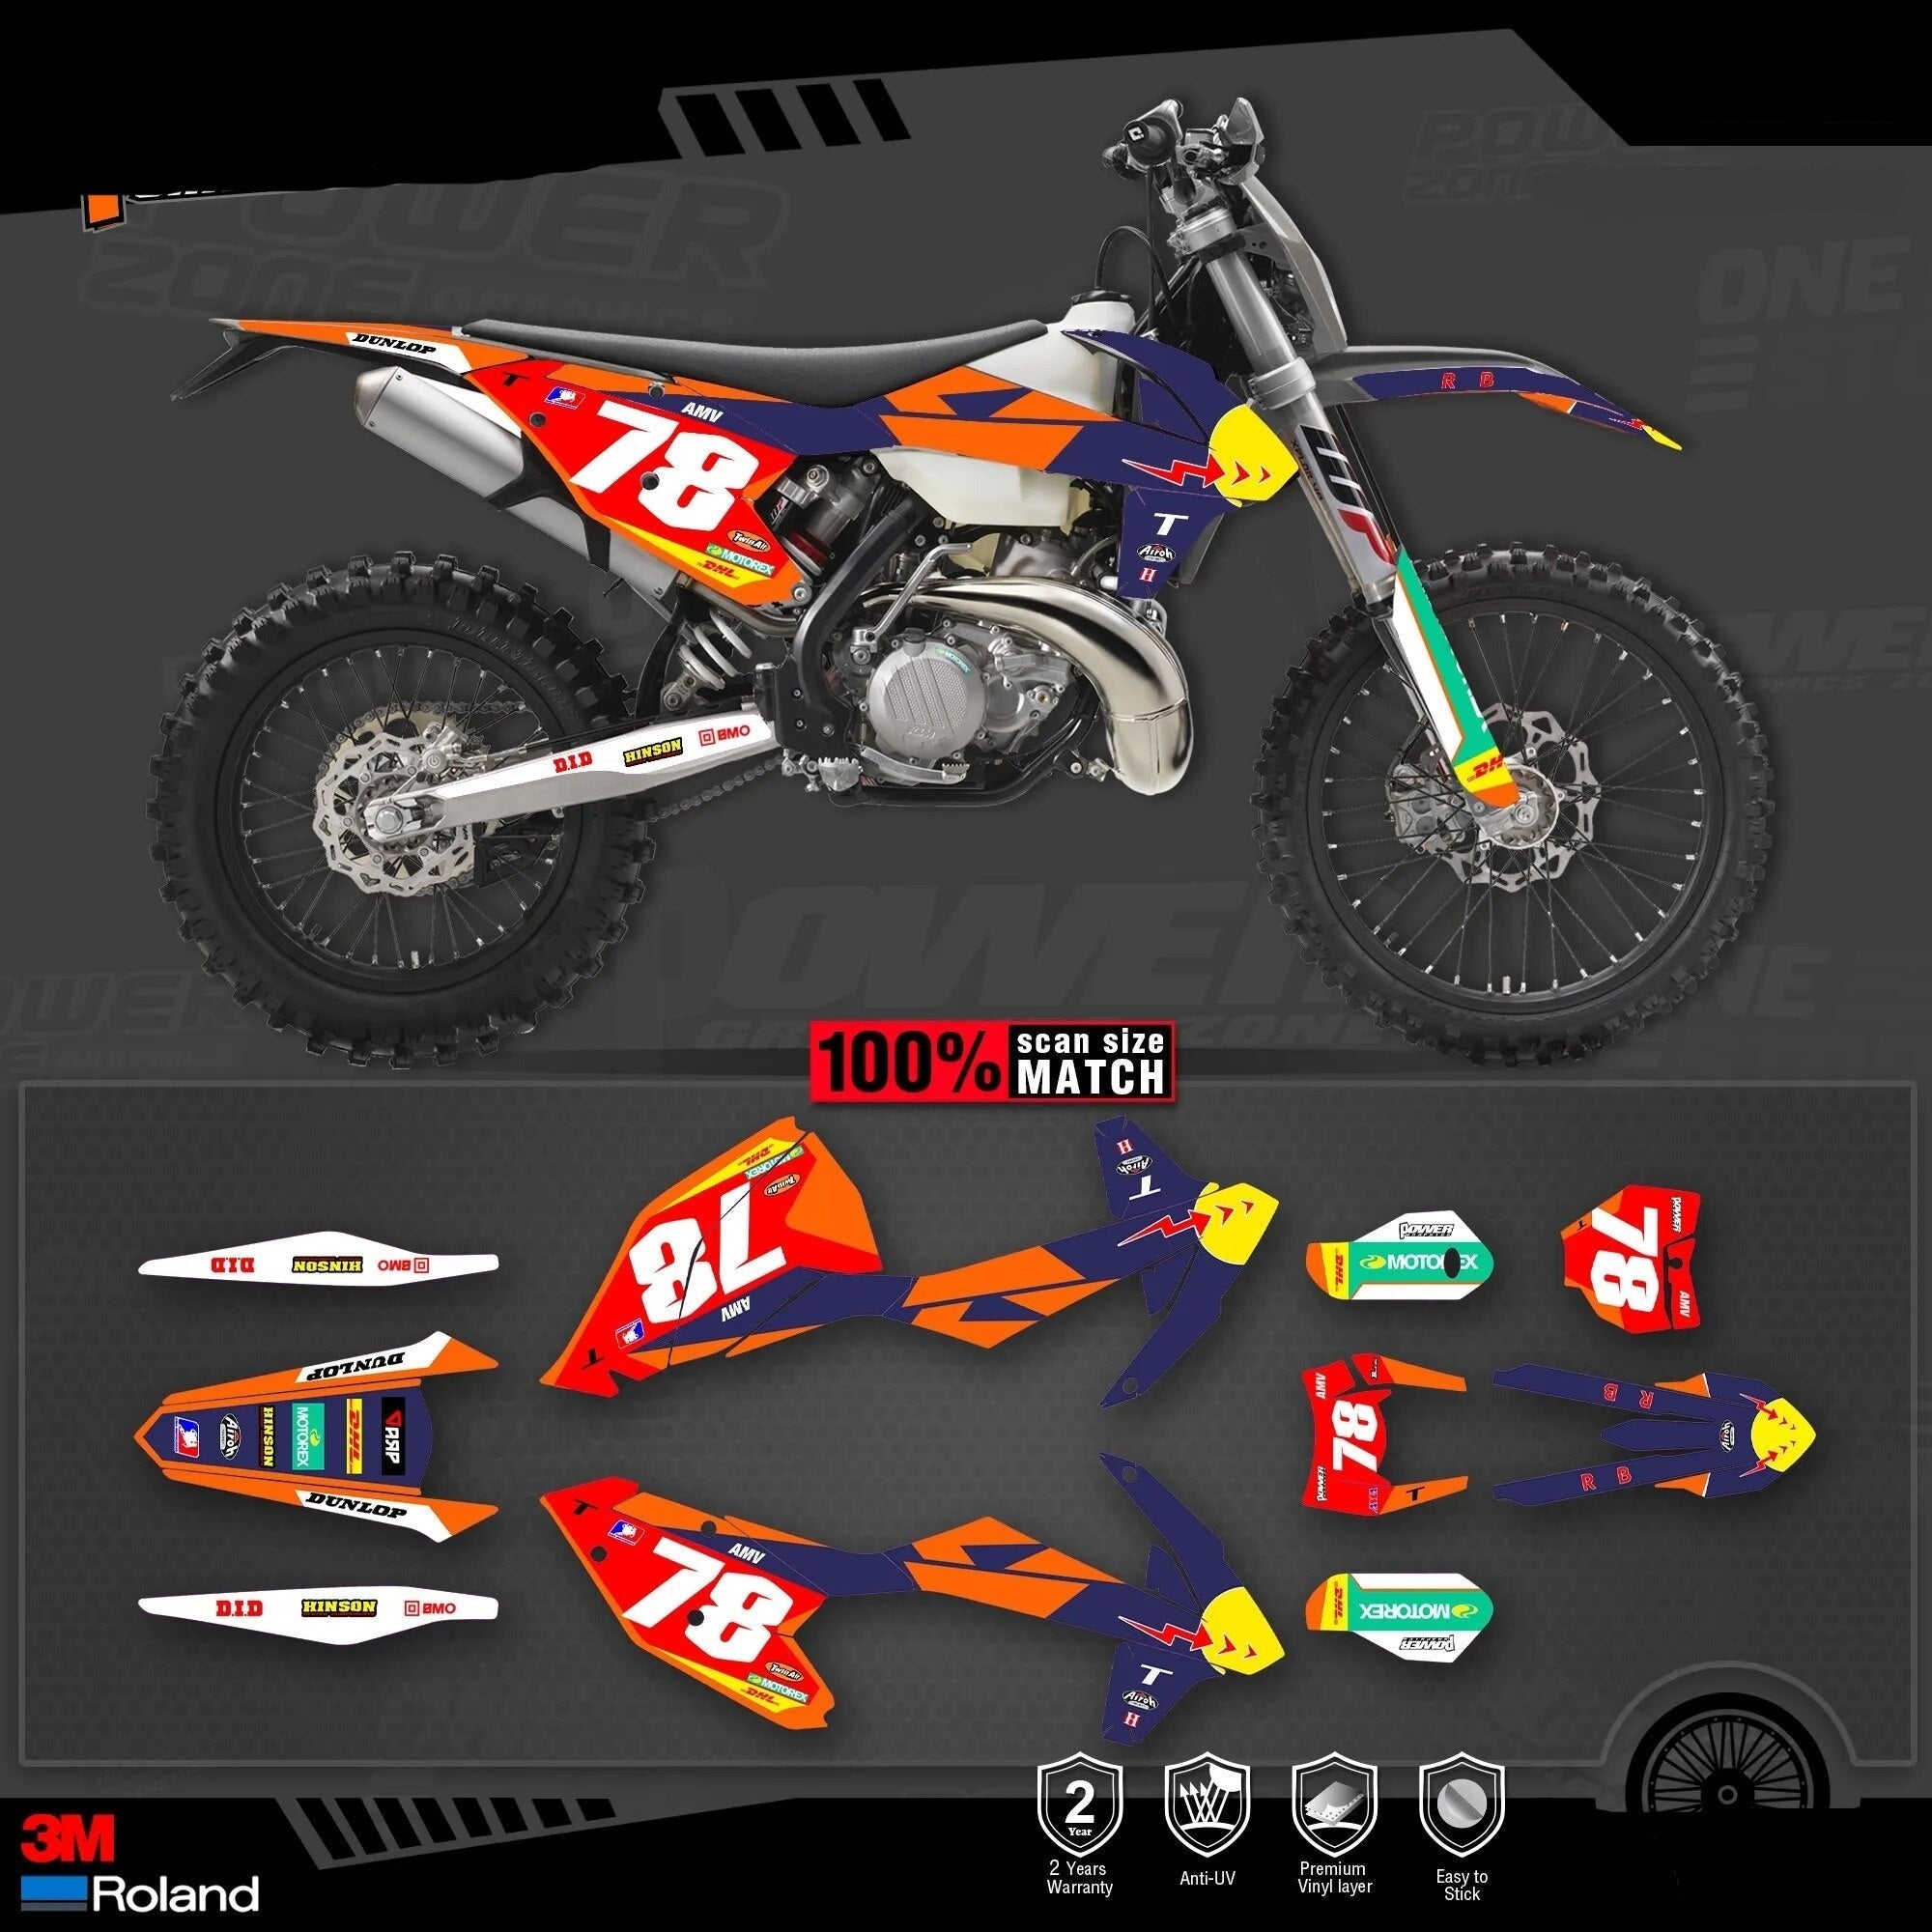 Custom 3M Graphics Kit for Bikes 125-500cc 09-19